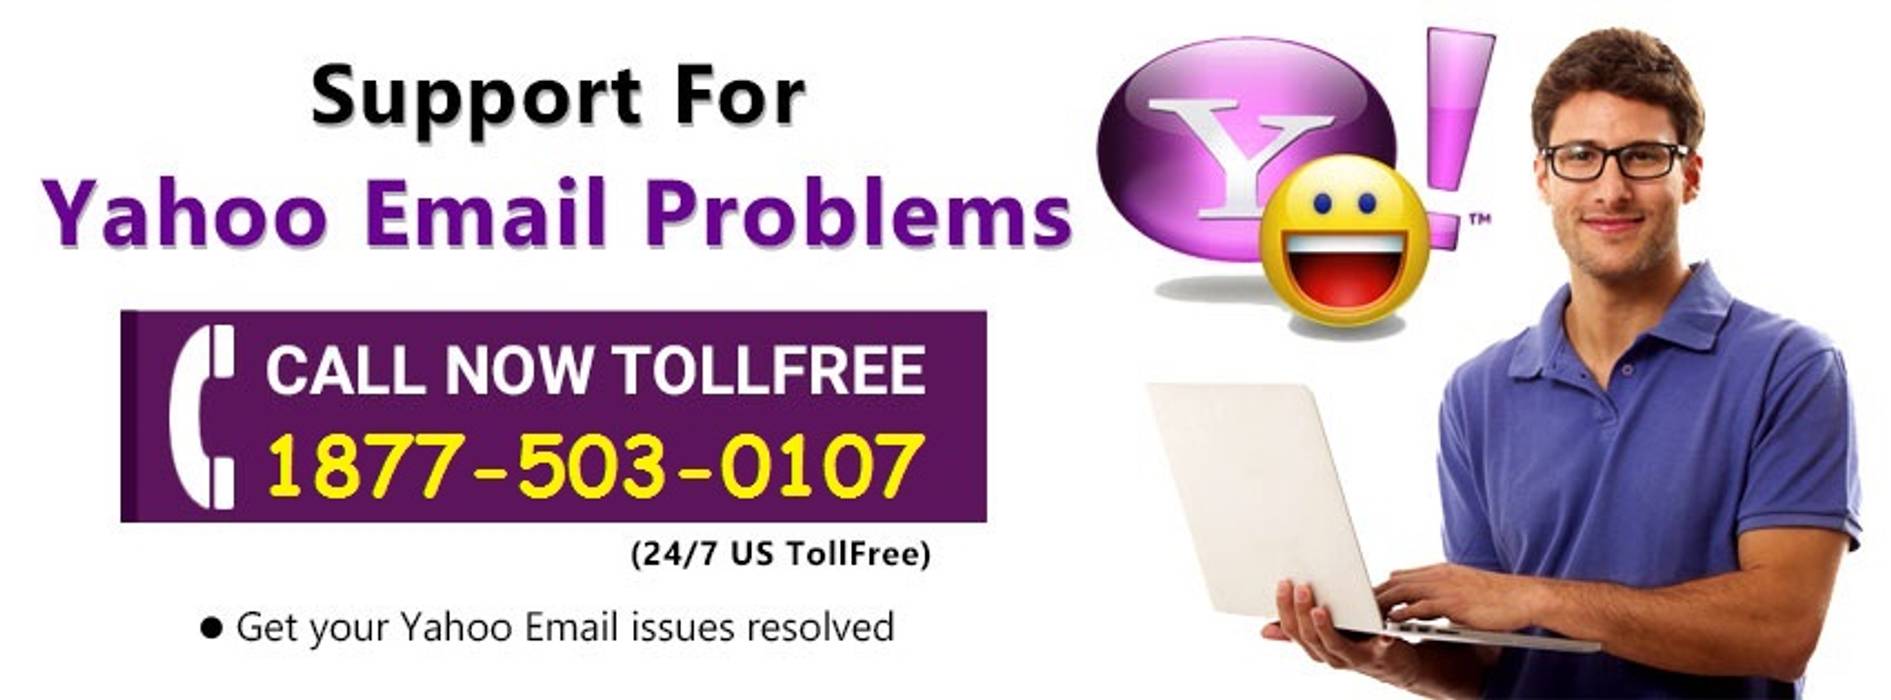 Contact Yahoo Customer Support Phone Number 1877-503-0107, Yahoo Mail Support Number 1877-503-0107 Yahoo Mail Support Number 1877-503-0107 Zeminler İşlenmiş Ahşap Şeffaf